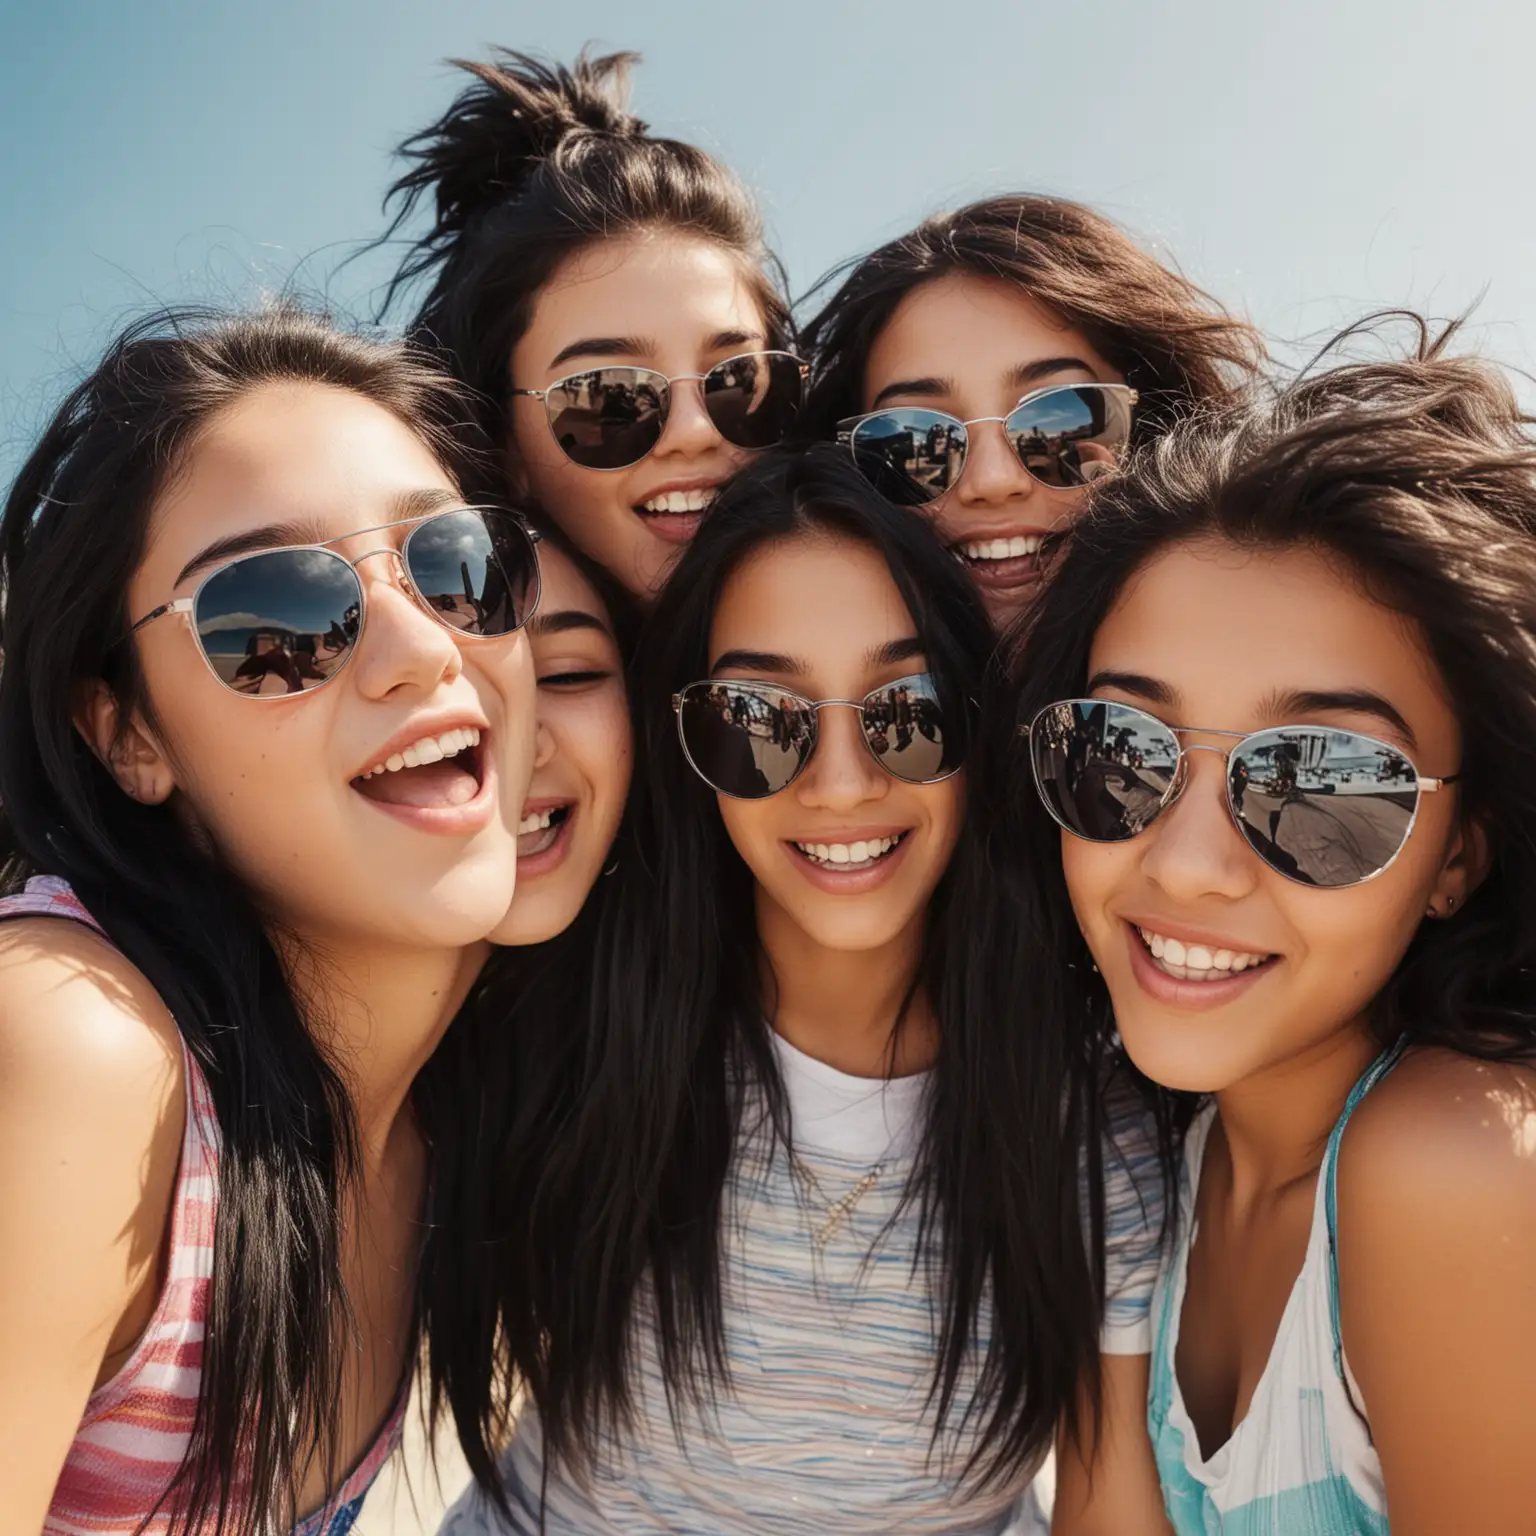 Teenage Girls Having Fun in Sunglasses